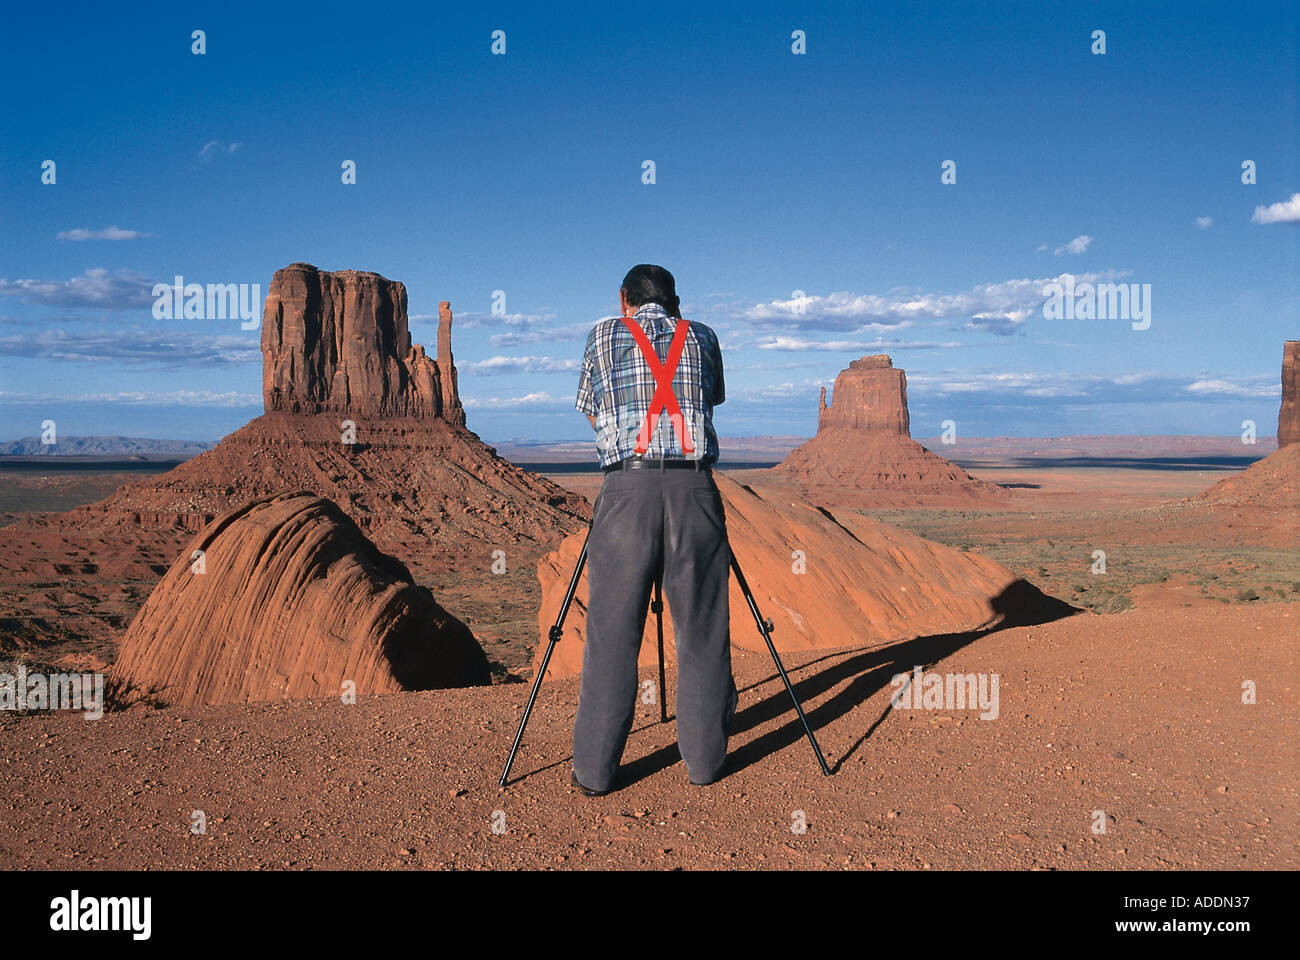 Fotograf bei der Arbeit, Gene Lambert, Monument Valley Tribal Park, Arizona, Stati Uniti d'America Foto Stock